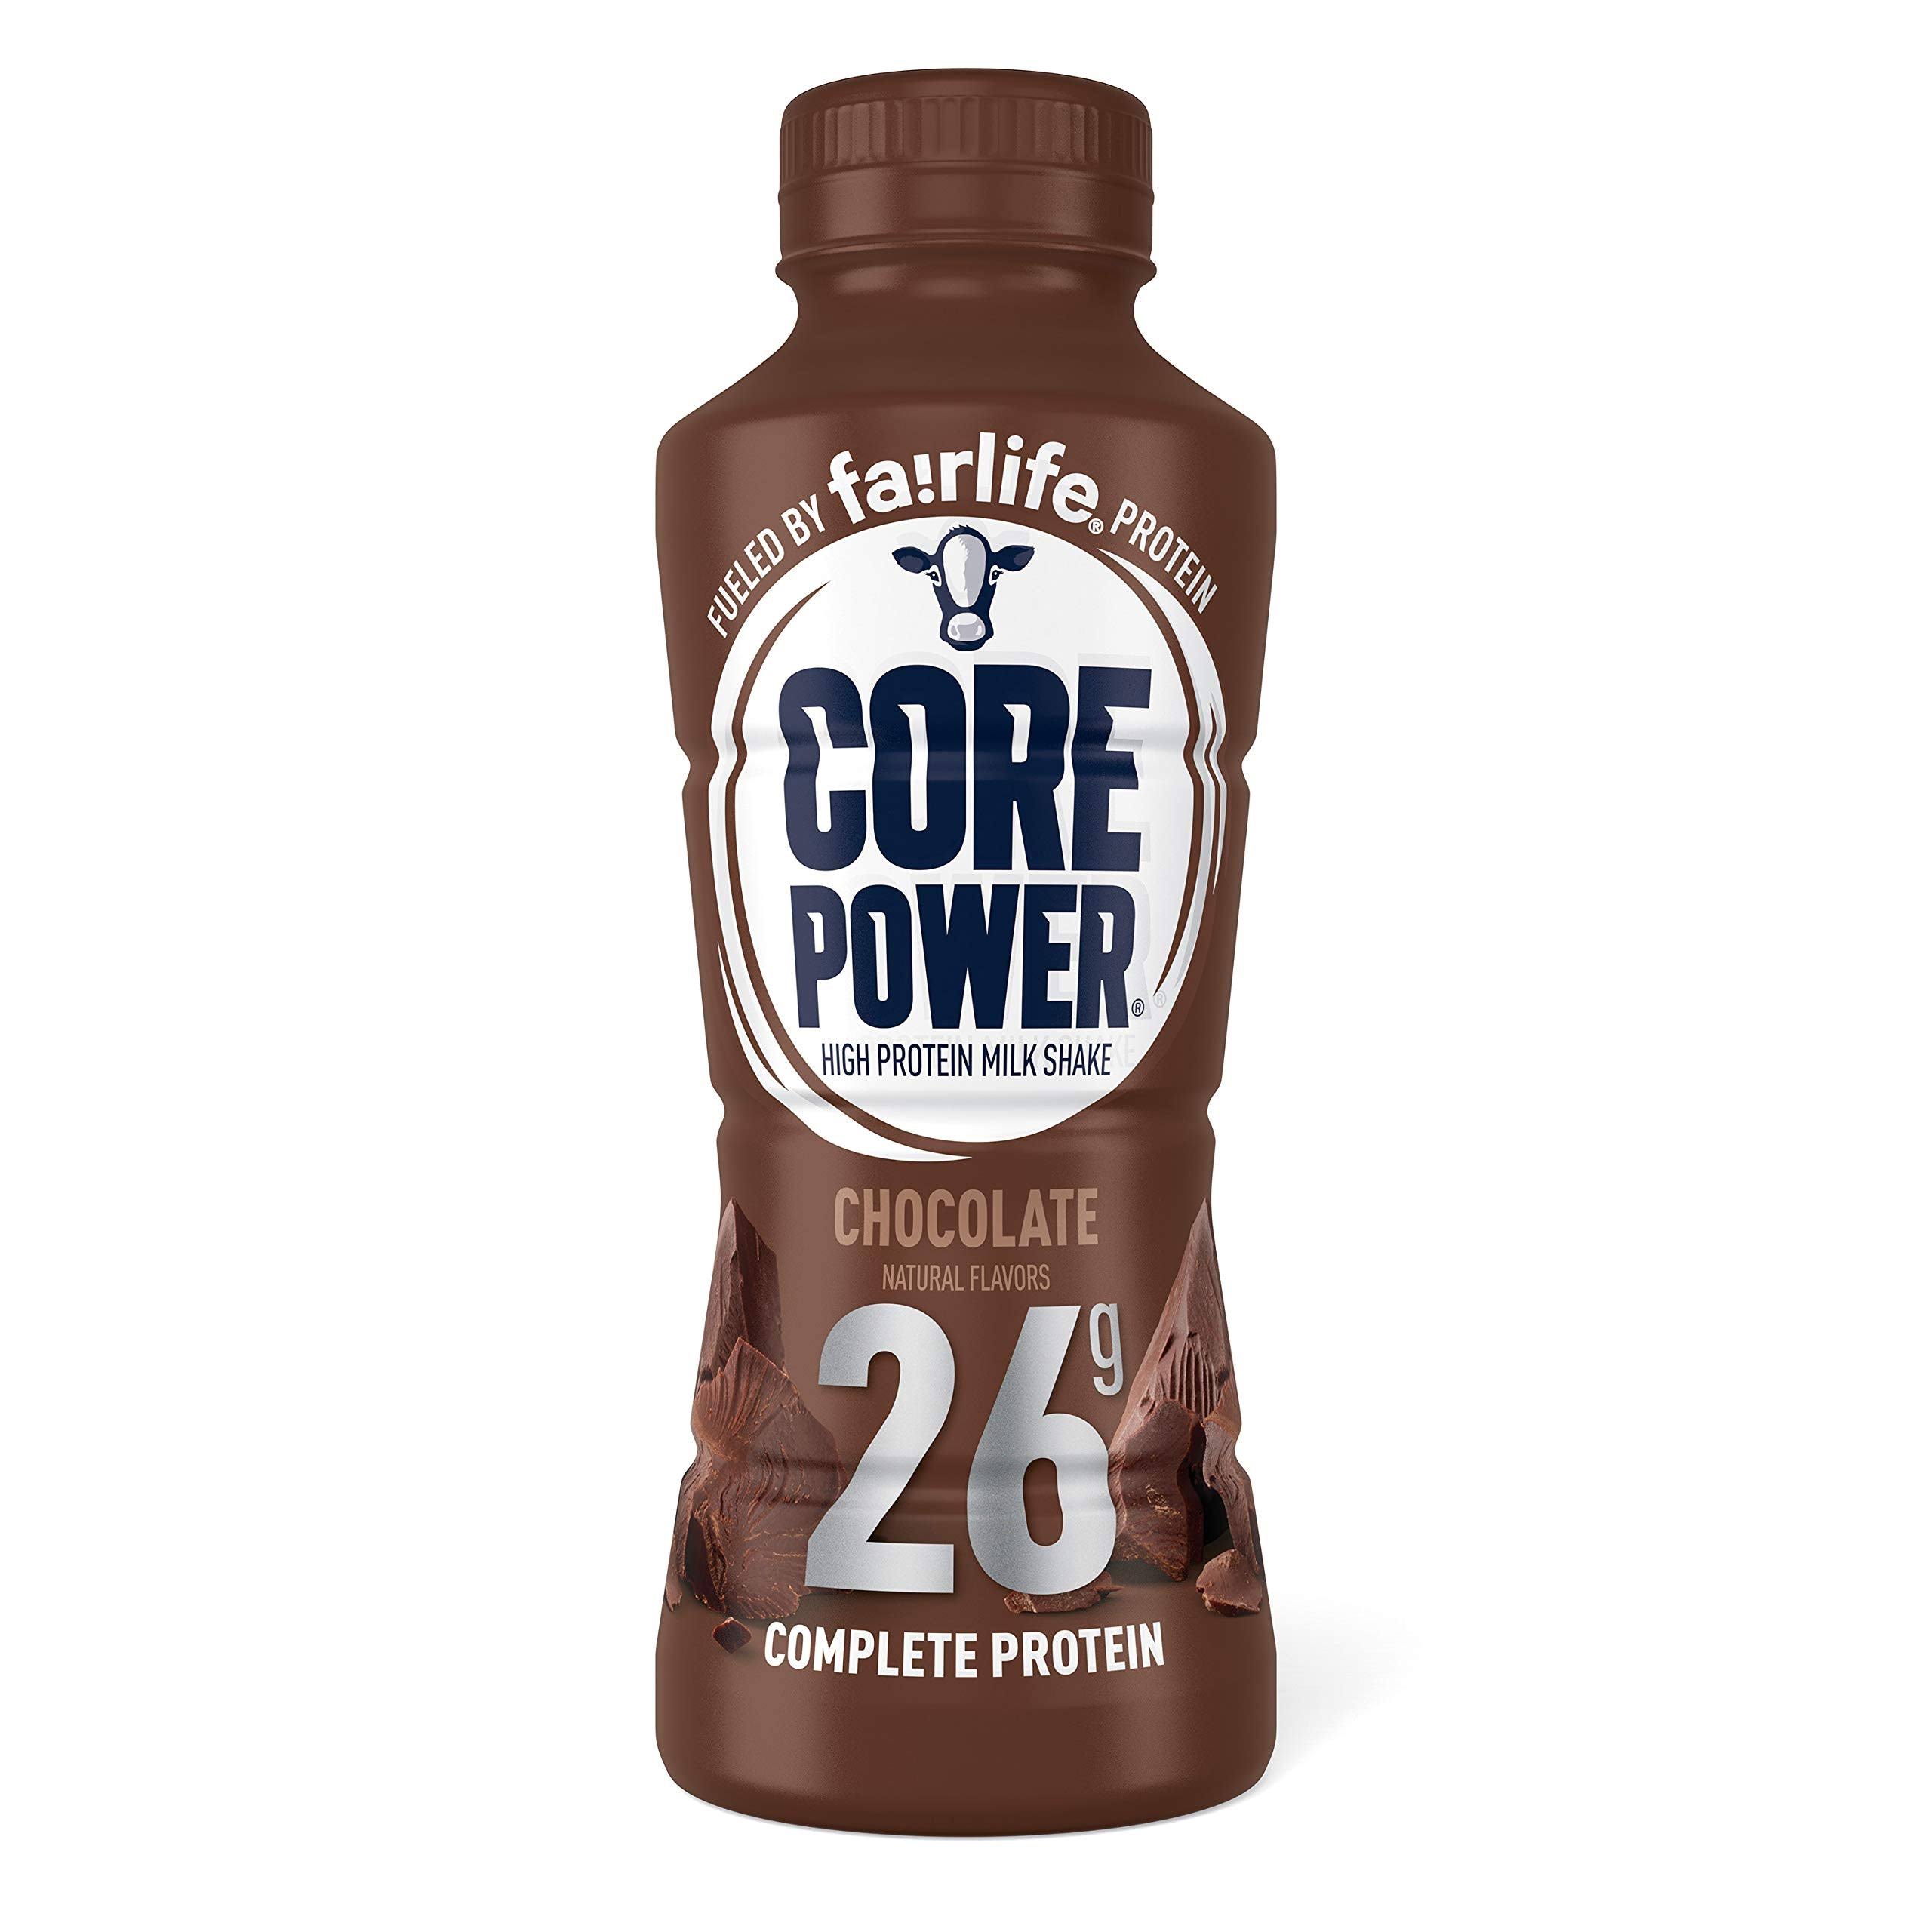 Core Power Milk Shake, High Protein, Chocolate - 14 fl oz